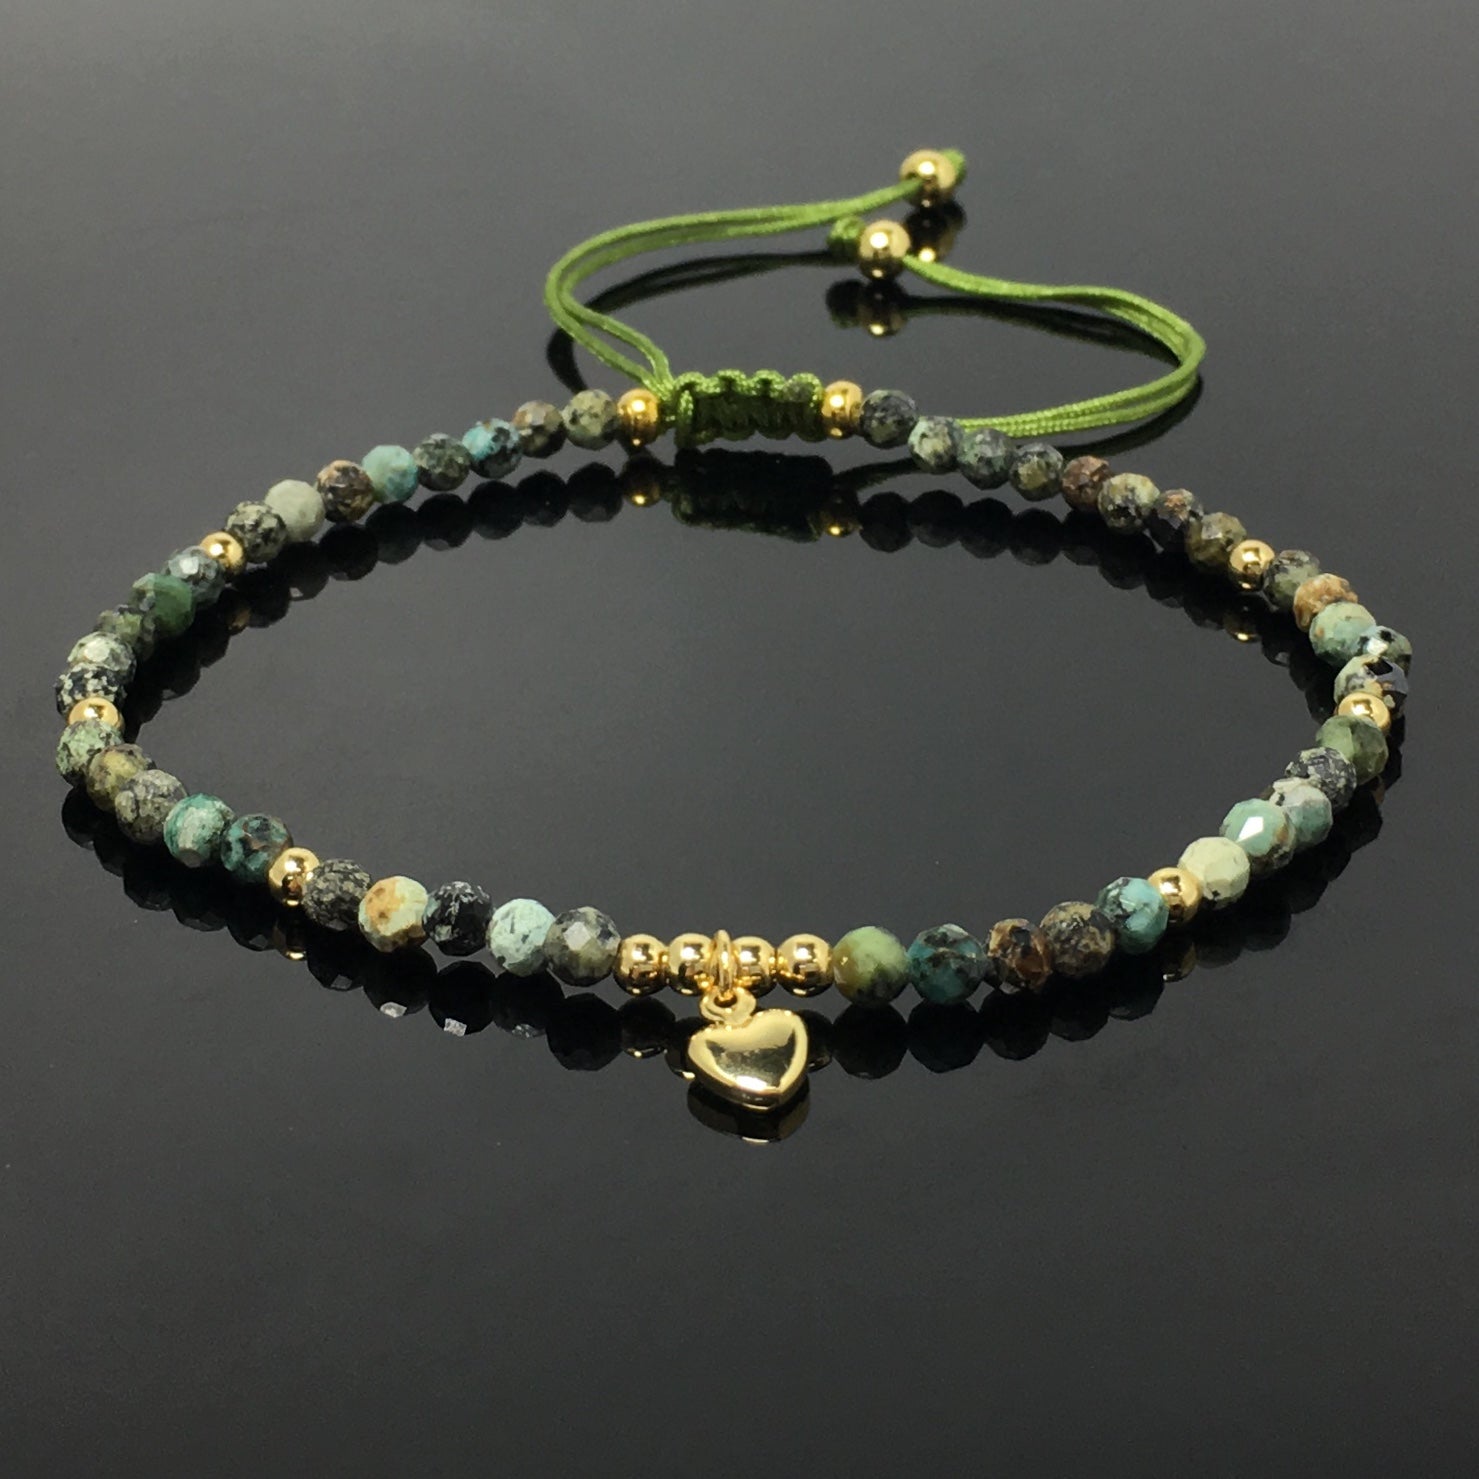 African Turquoise Gemstone Braid Rope Macrame Adjustable Bracelet Tiny Beads Gemstone Bracelet with Love Heart Charm